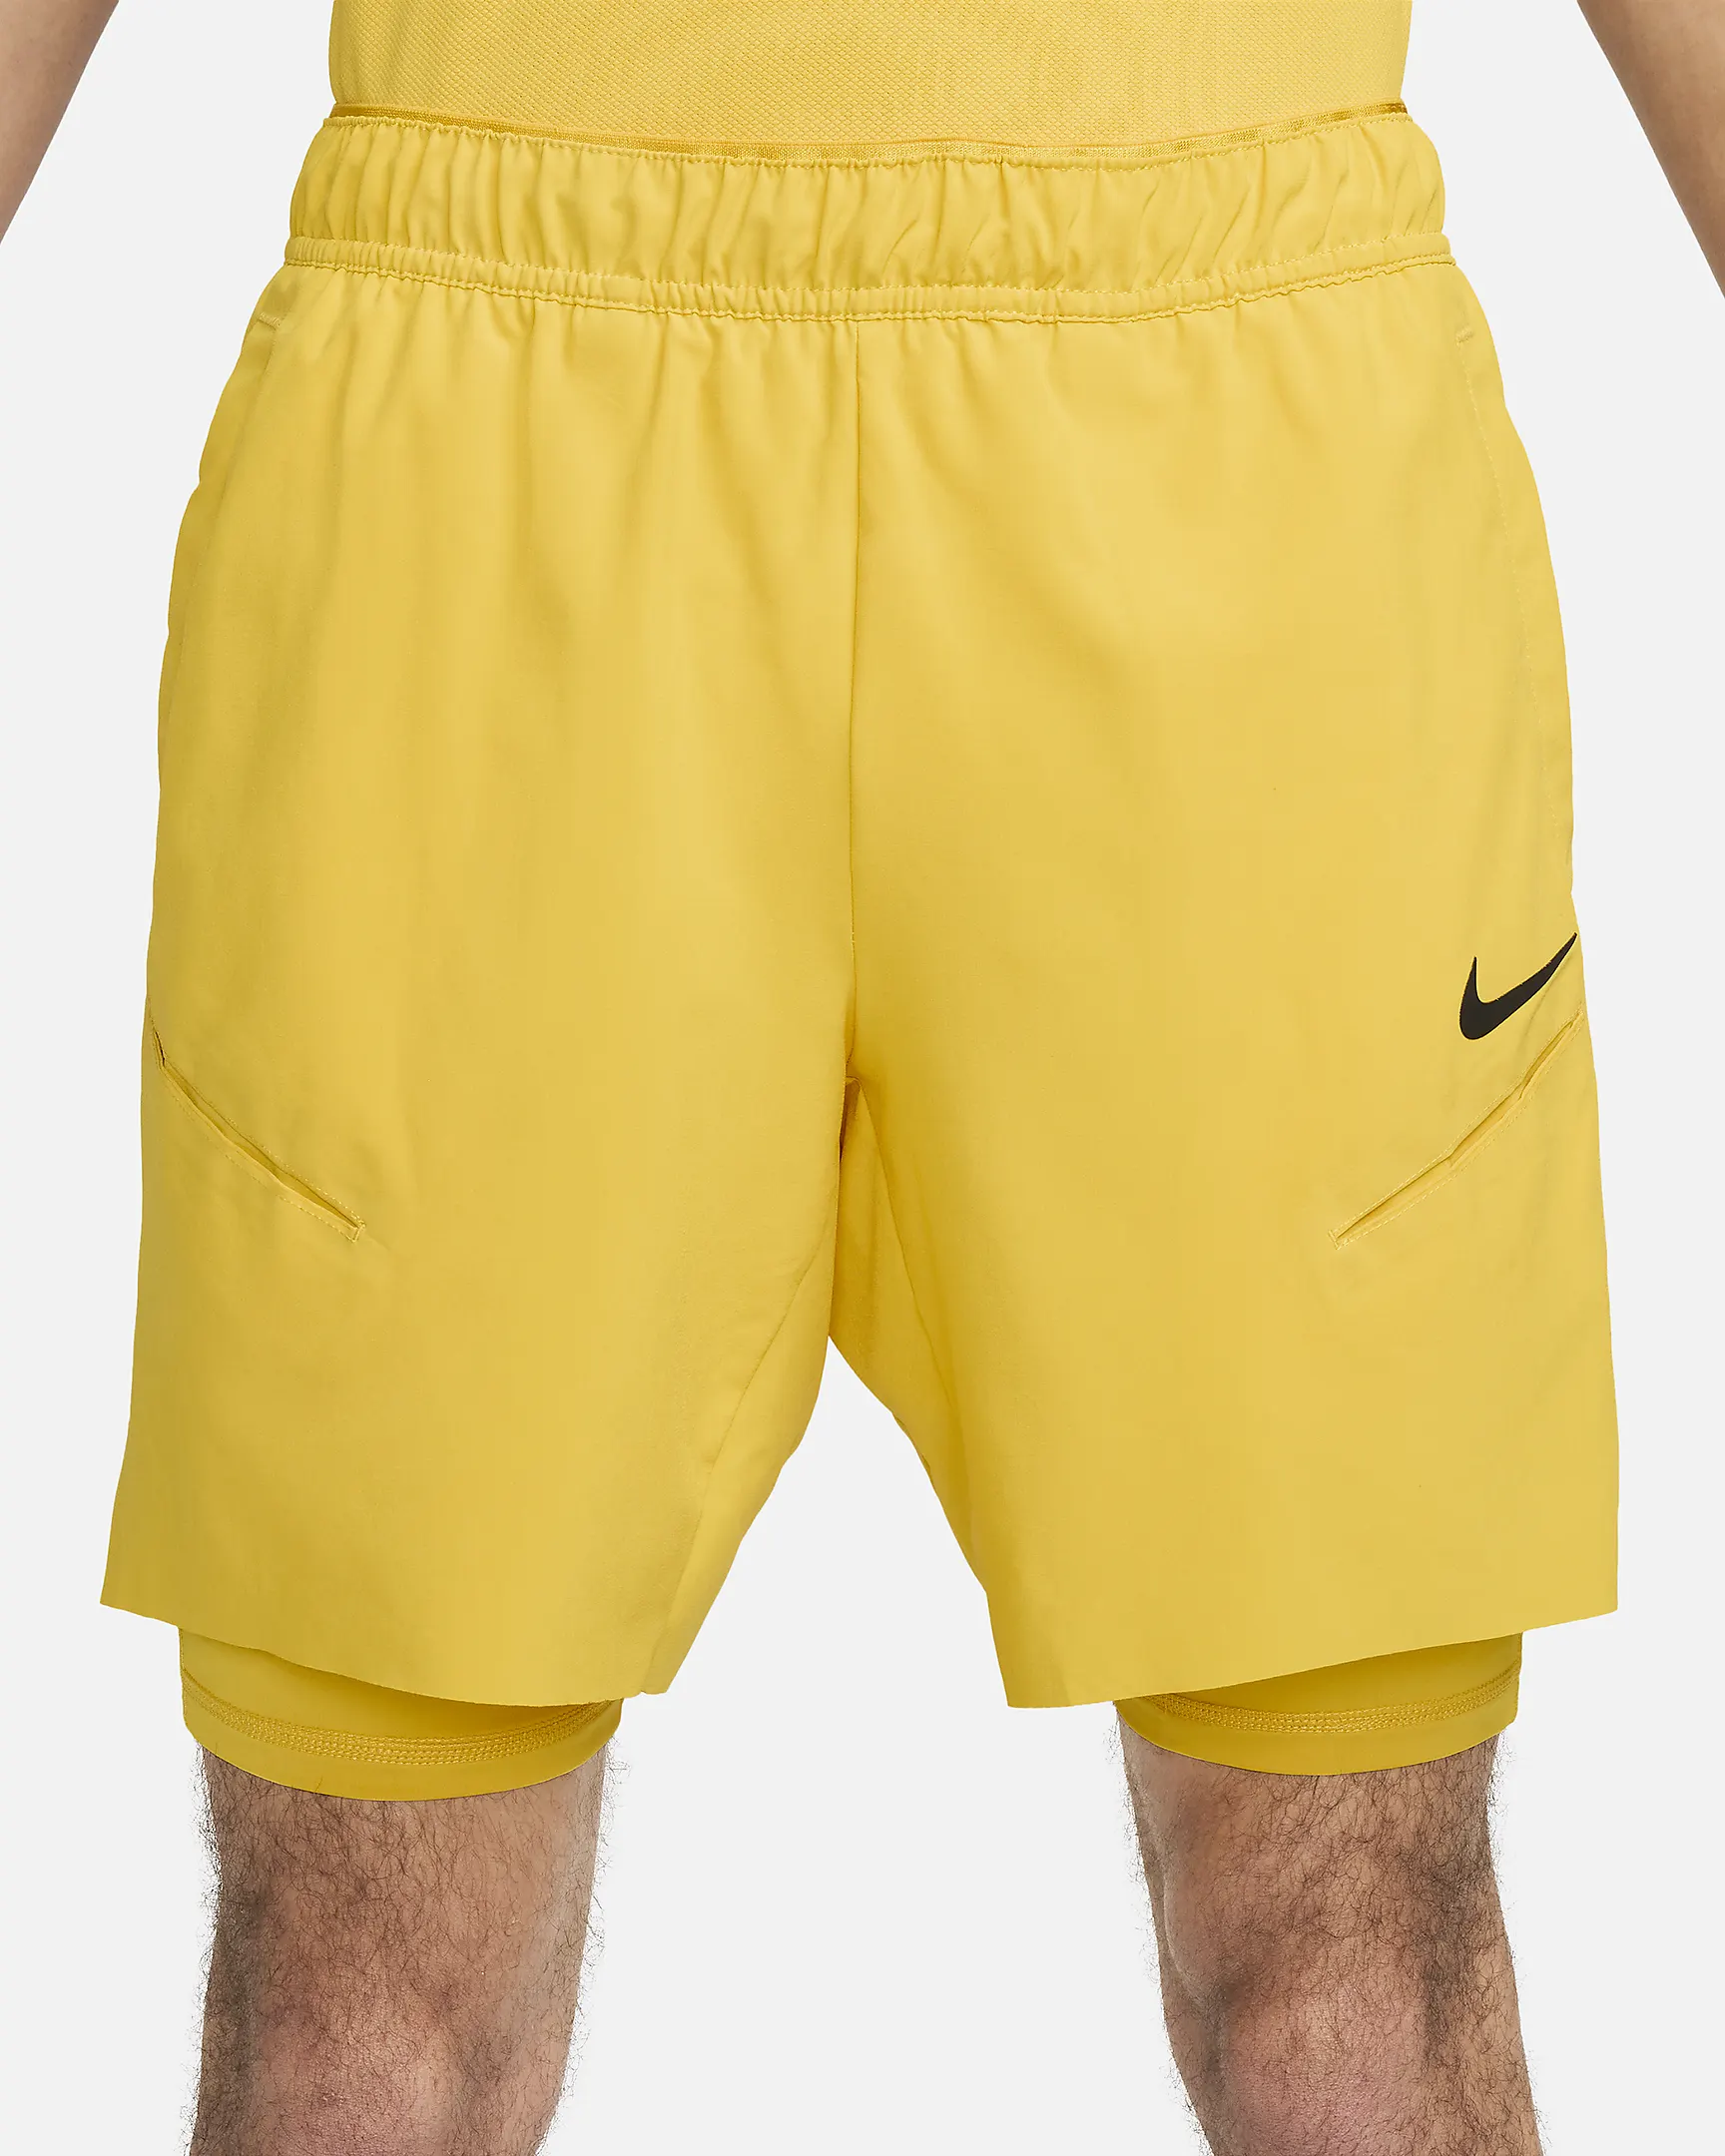 Nikecourt Slam Dri Fit Tennis Shorts Q6tnvt